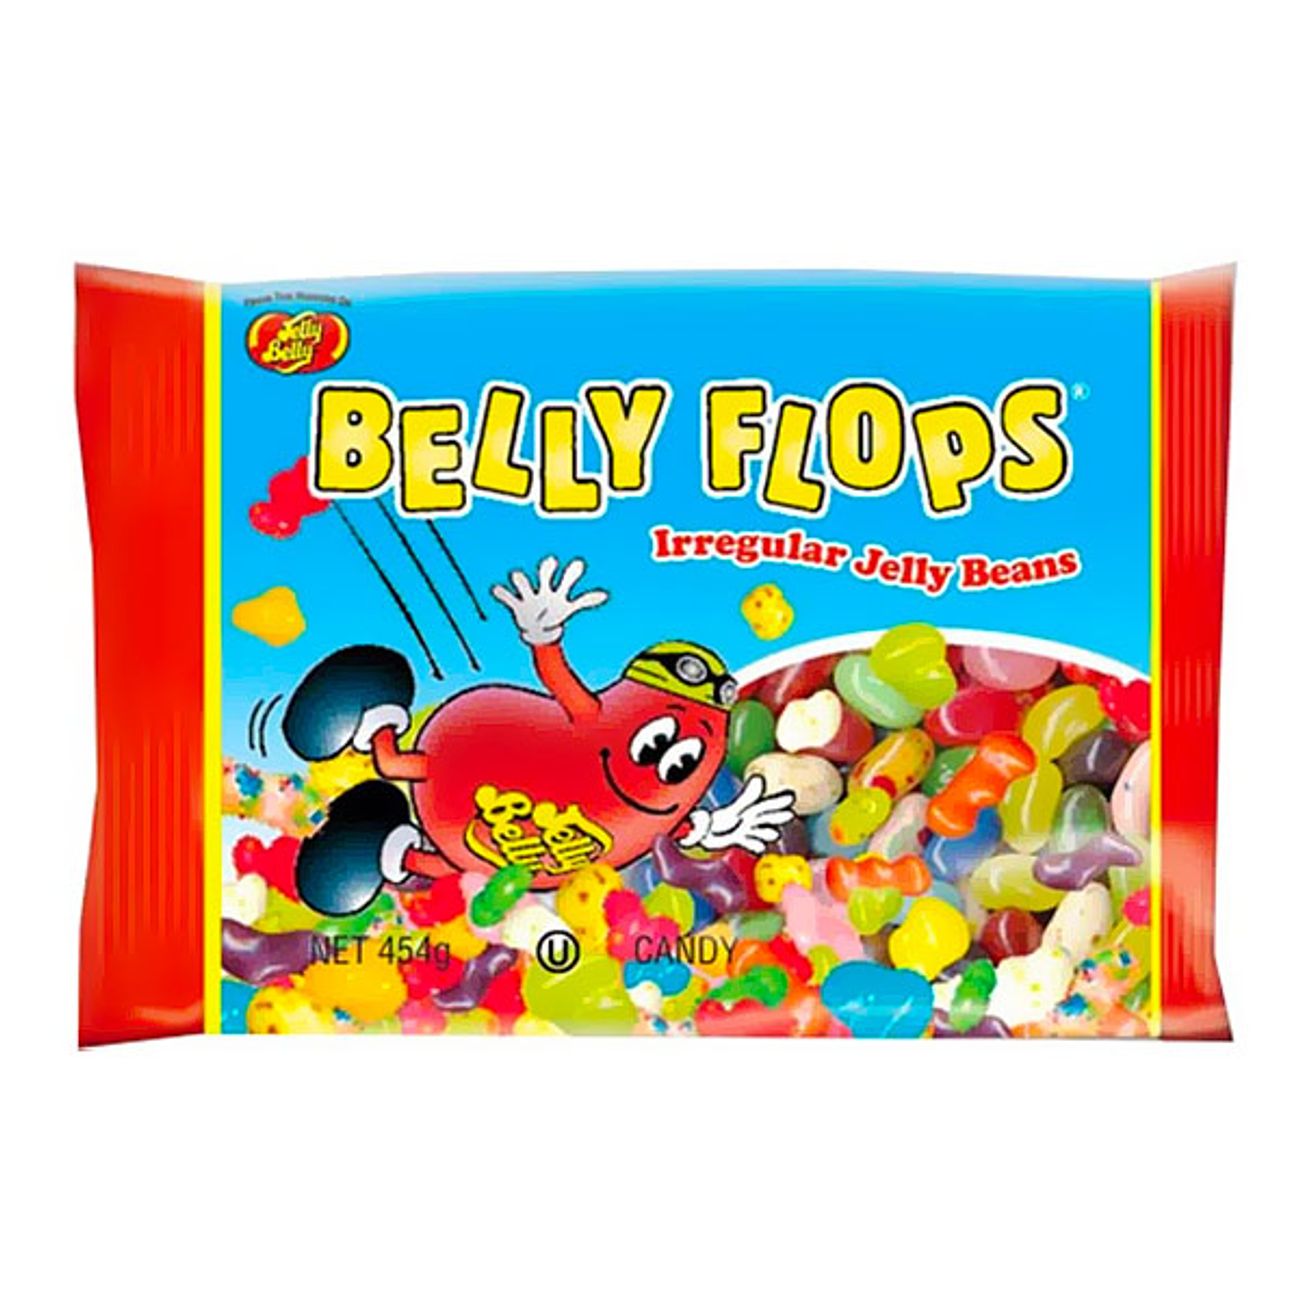 jelly-belly-flops-godispase-1